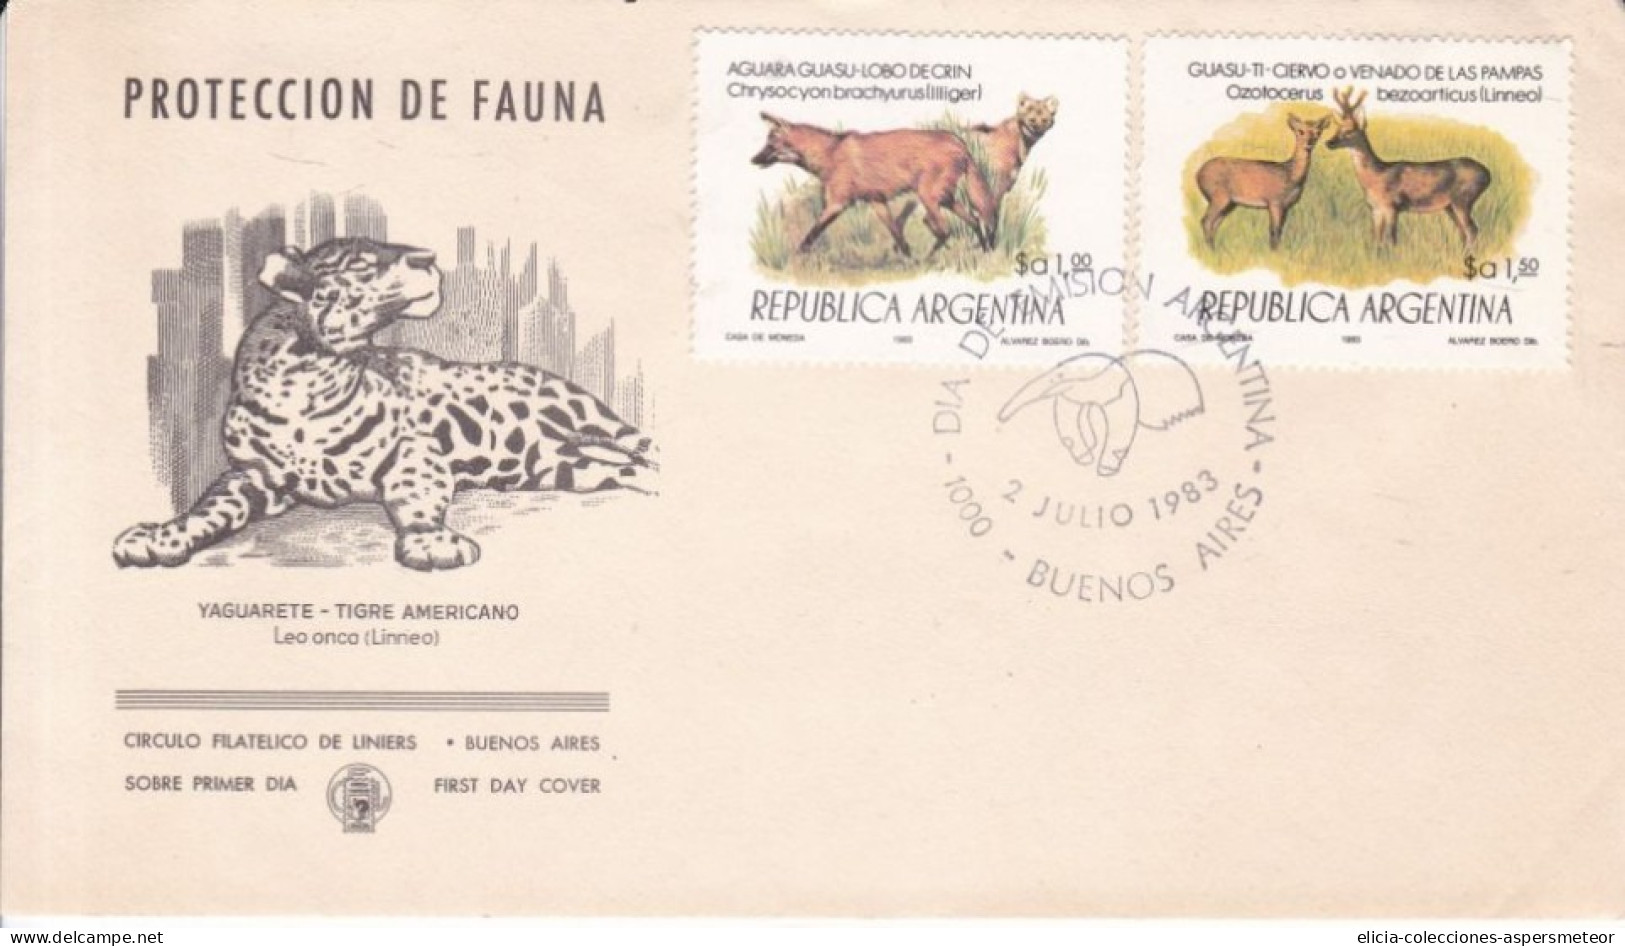 Argentina - 1983 - Envelope - First Day Issue Postmark - Fauna Protection -  Aguara Guasu And Guasu Ti Stamps - Caja 30 - Usati